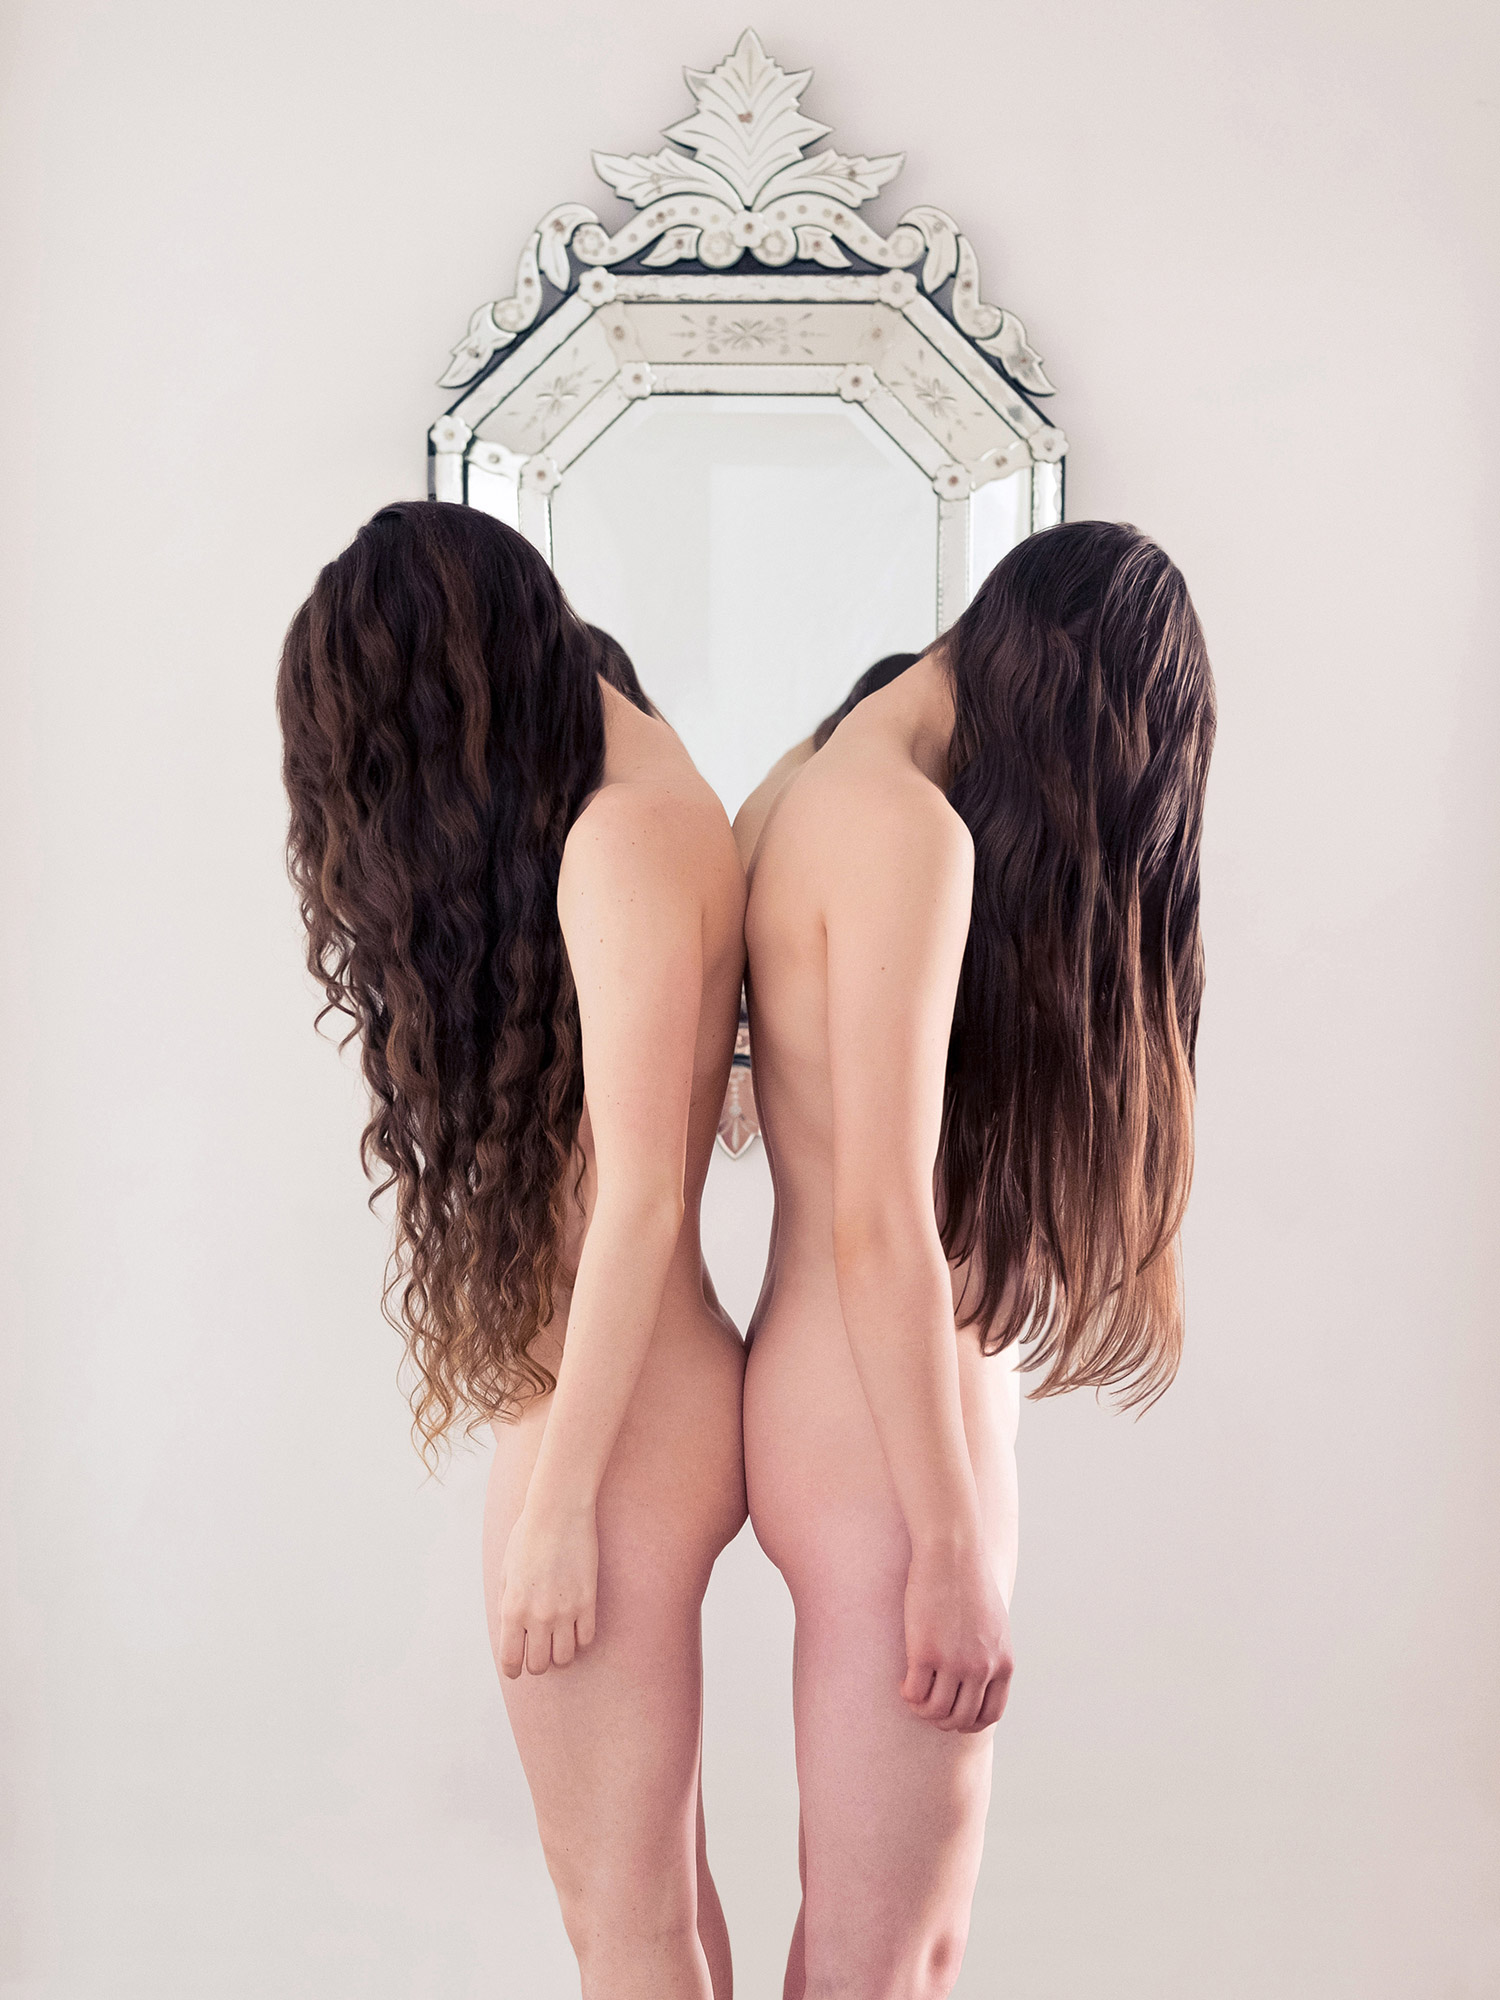 Brooke DiDonato - nude mirror image